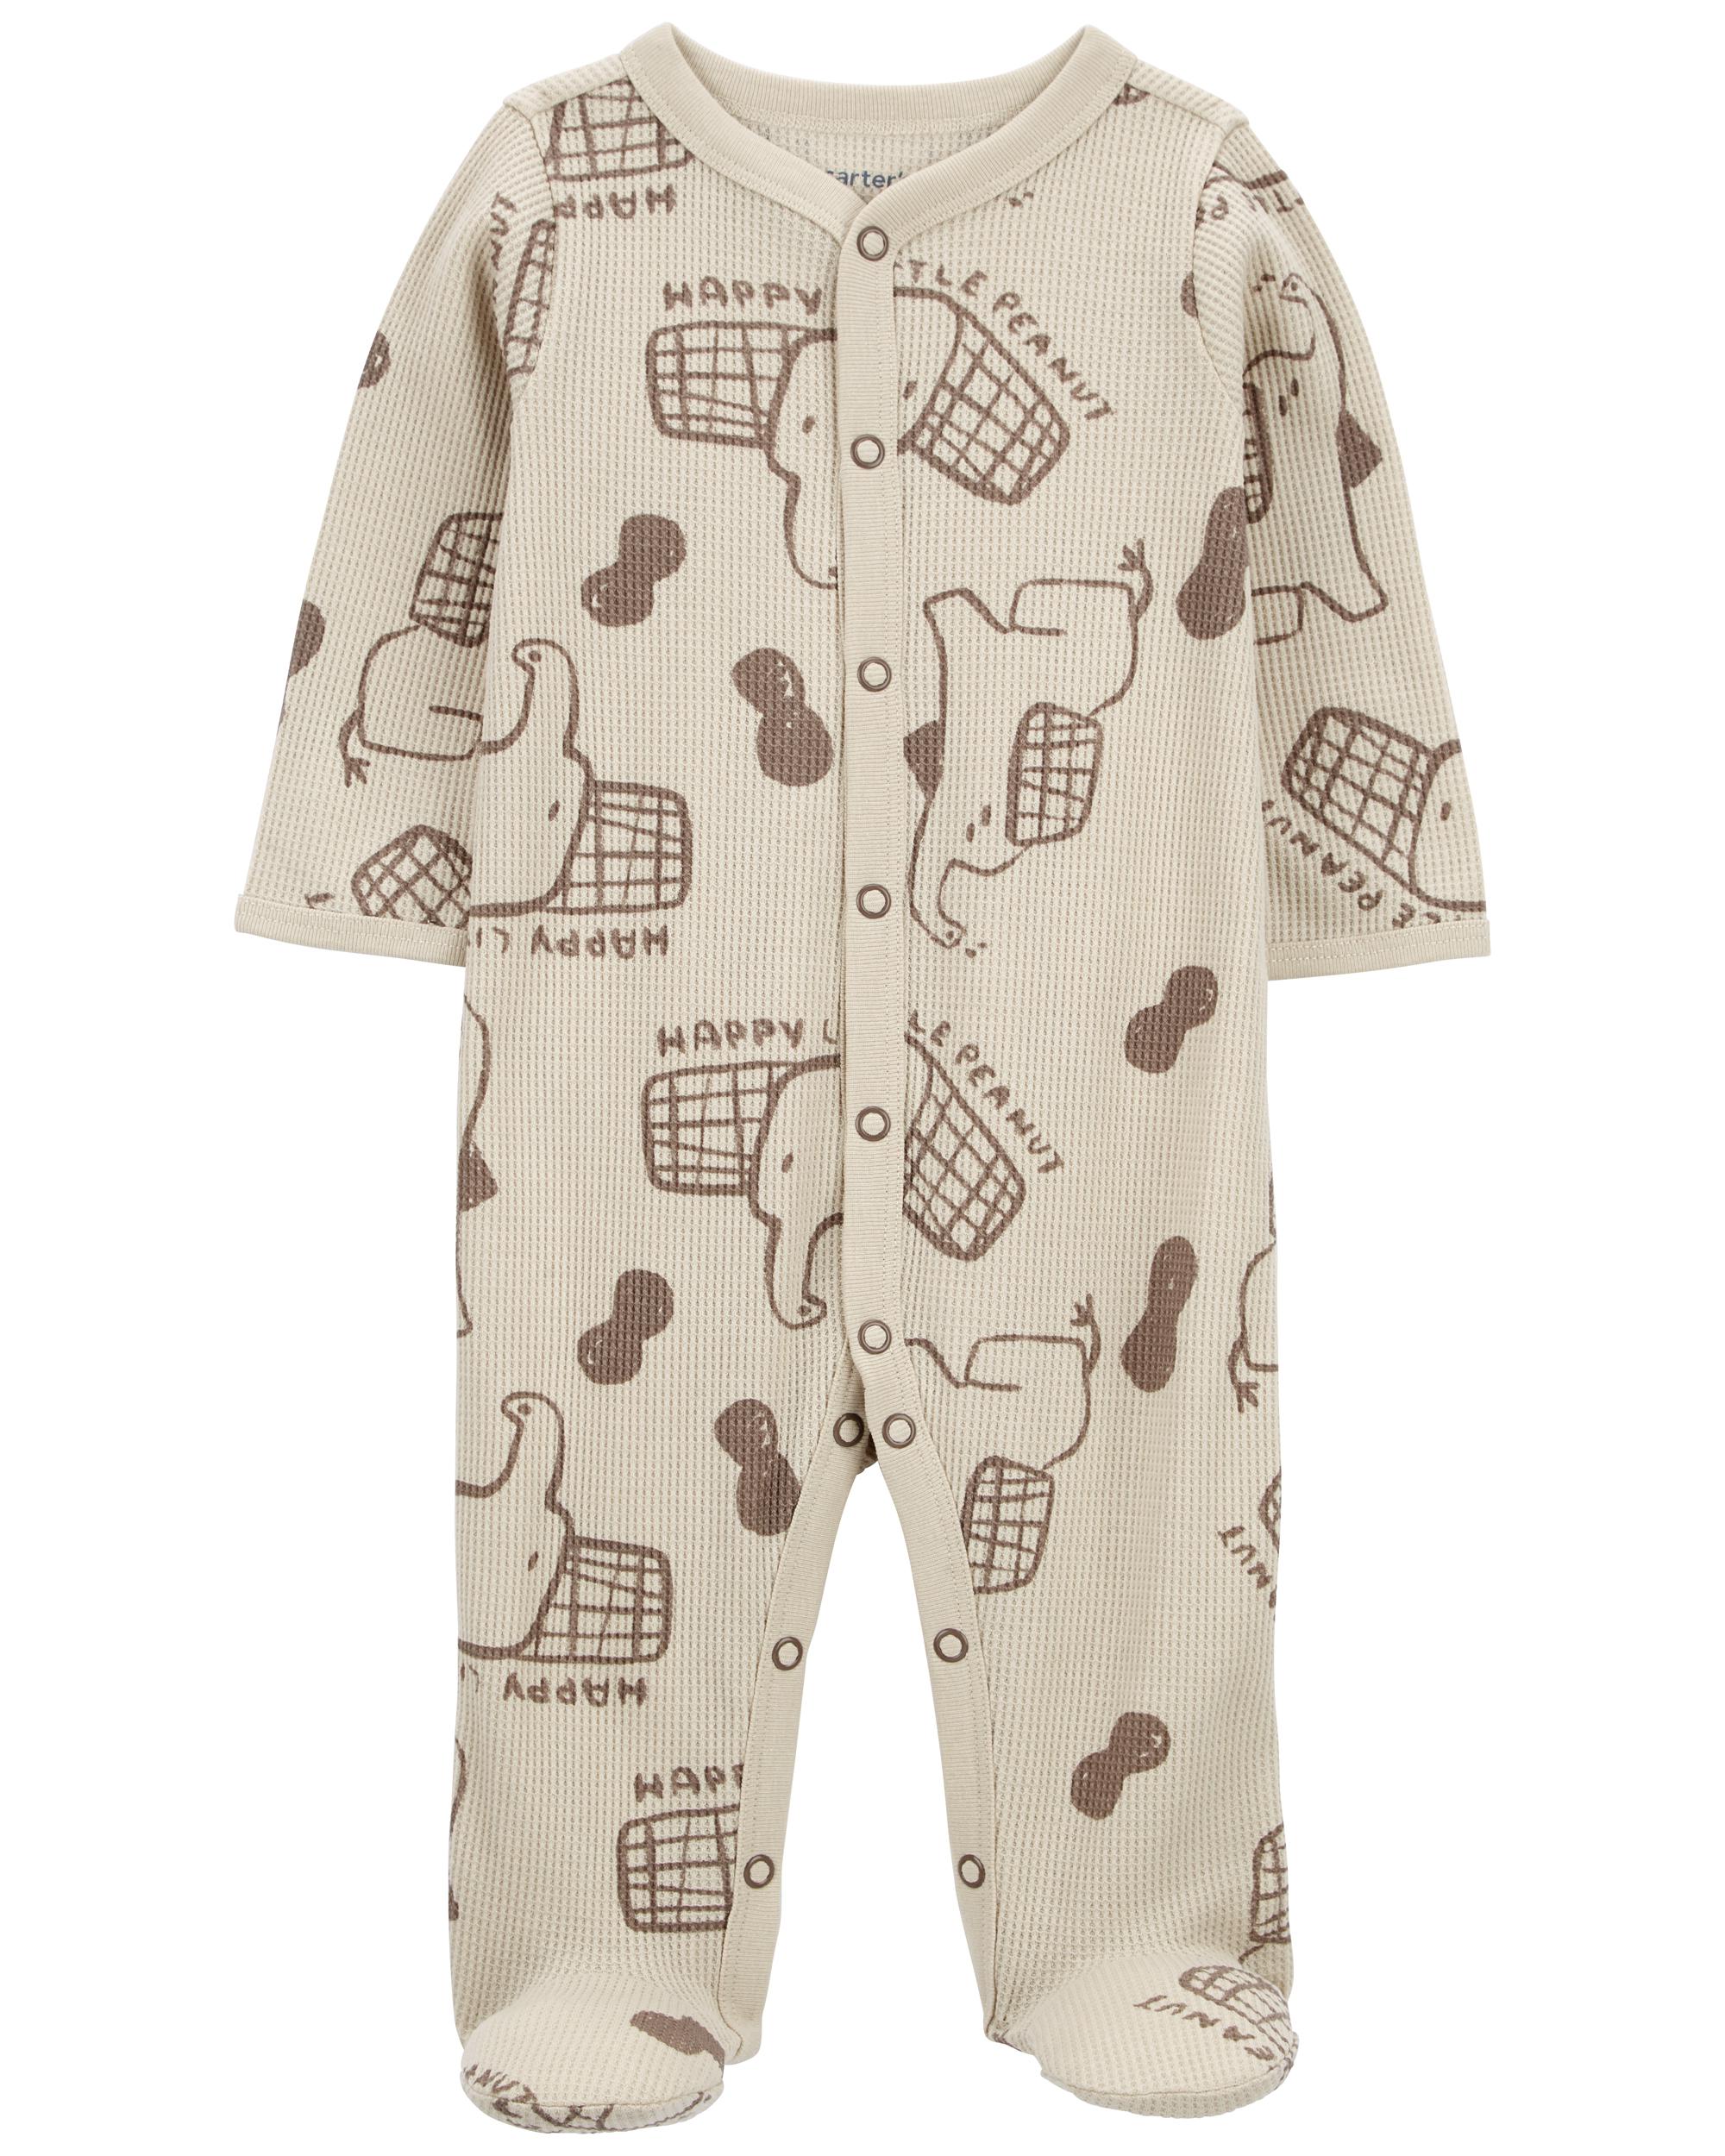 Baby Elephant Snap-Up Thermal Sleeper Pyjamas